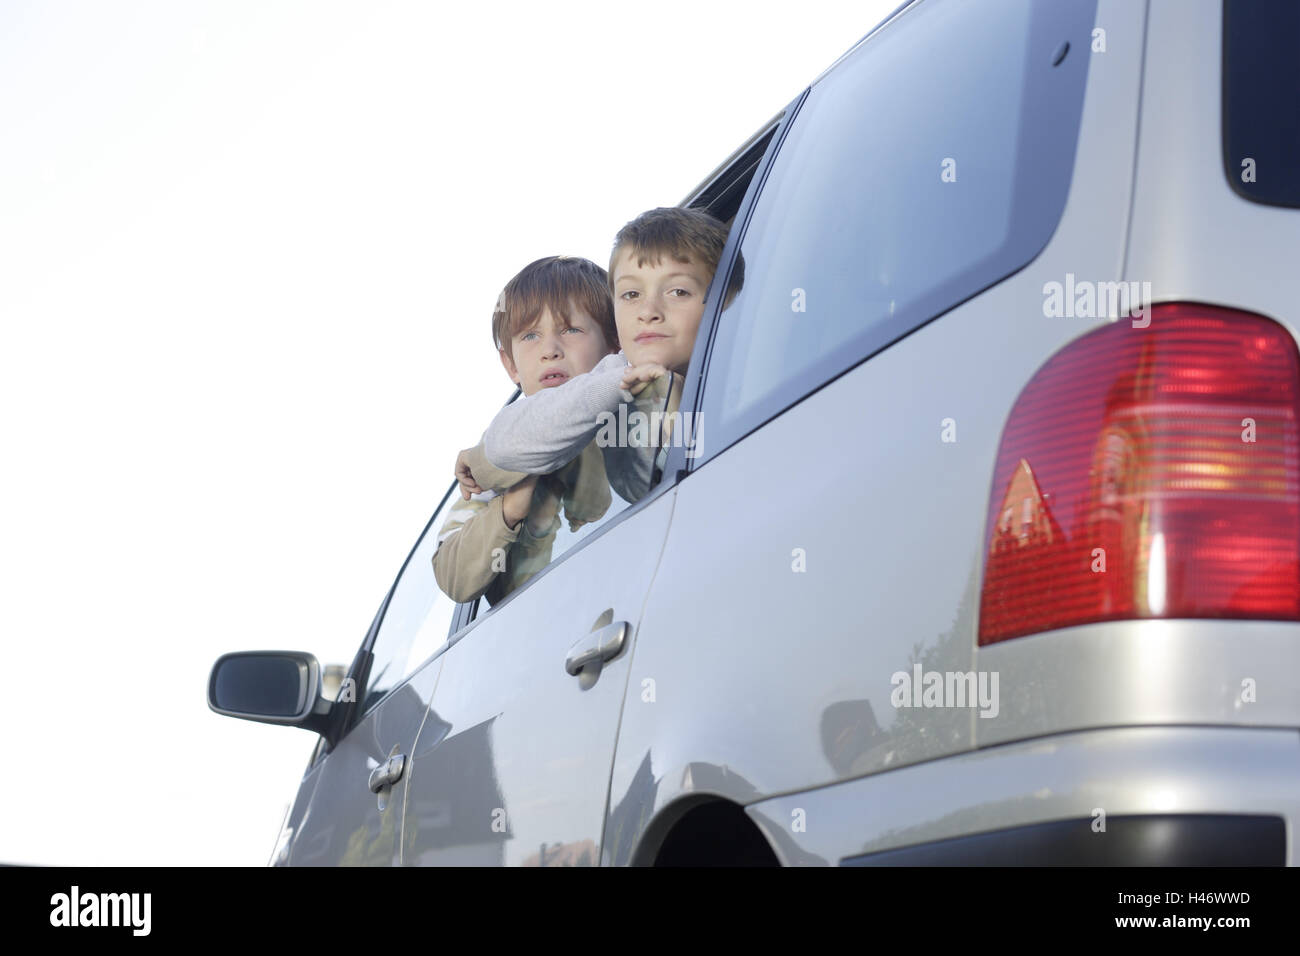 Children, boys, two, view car window, Stock Photo